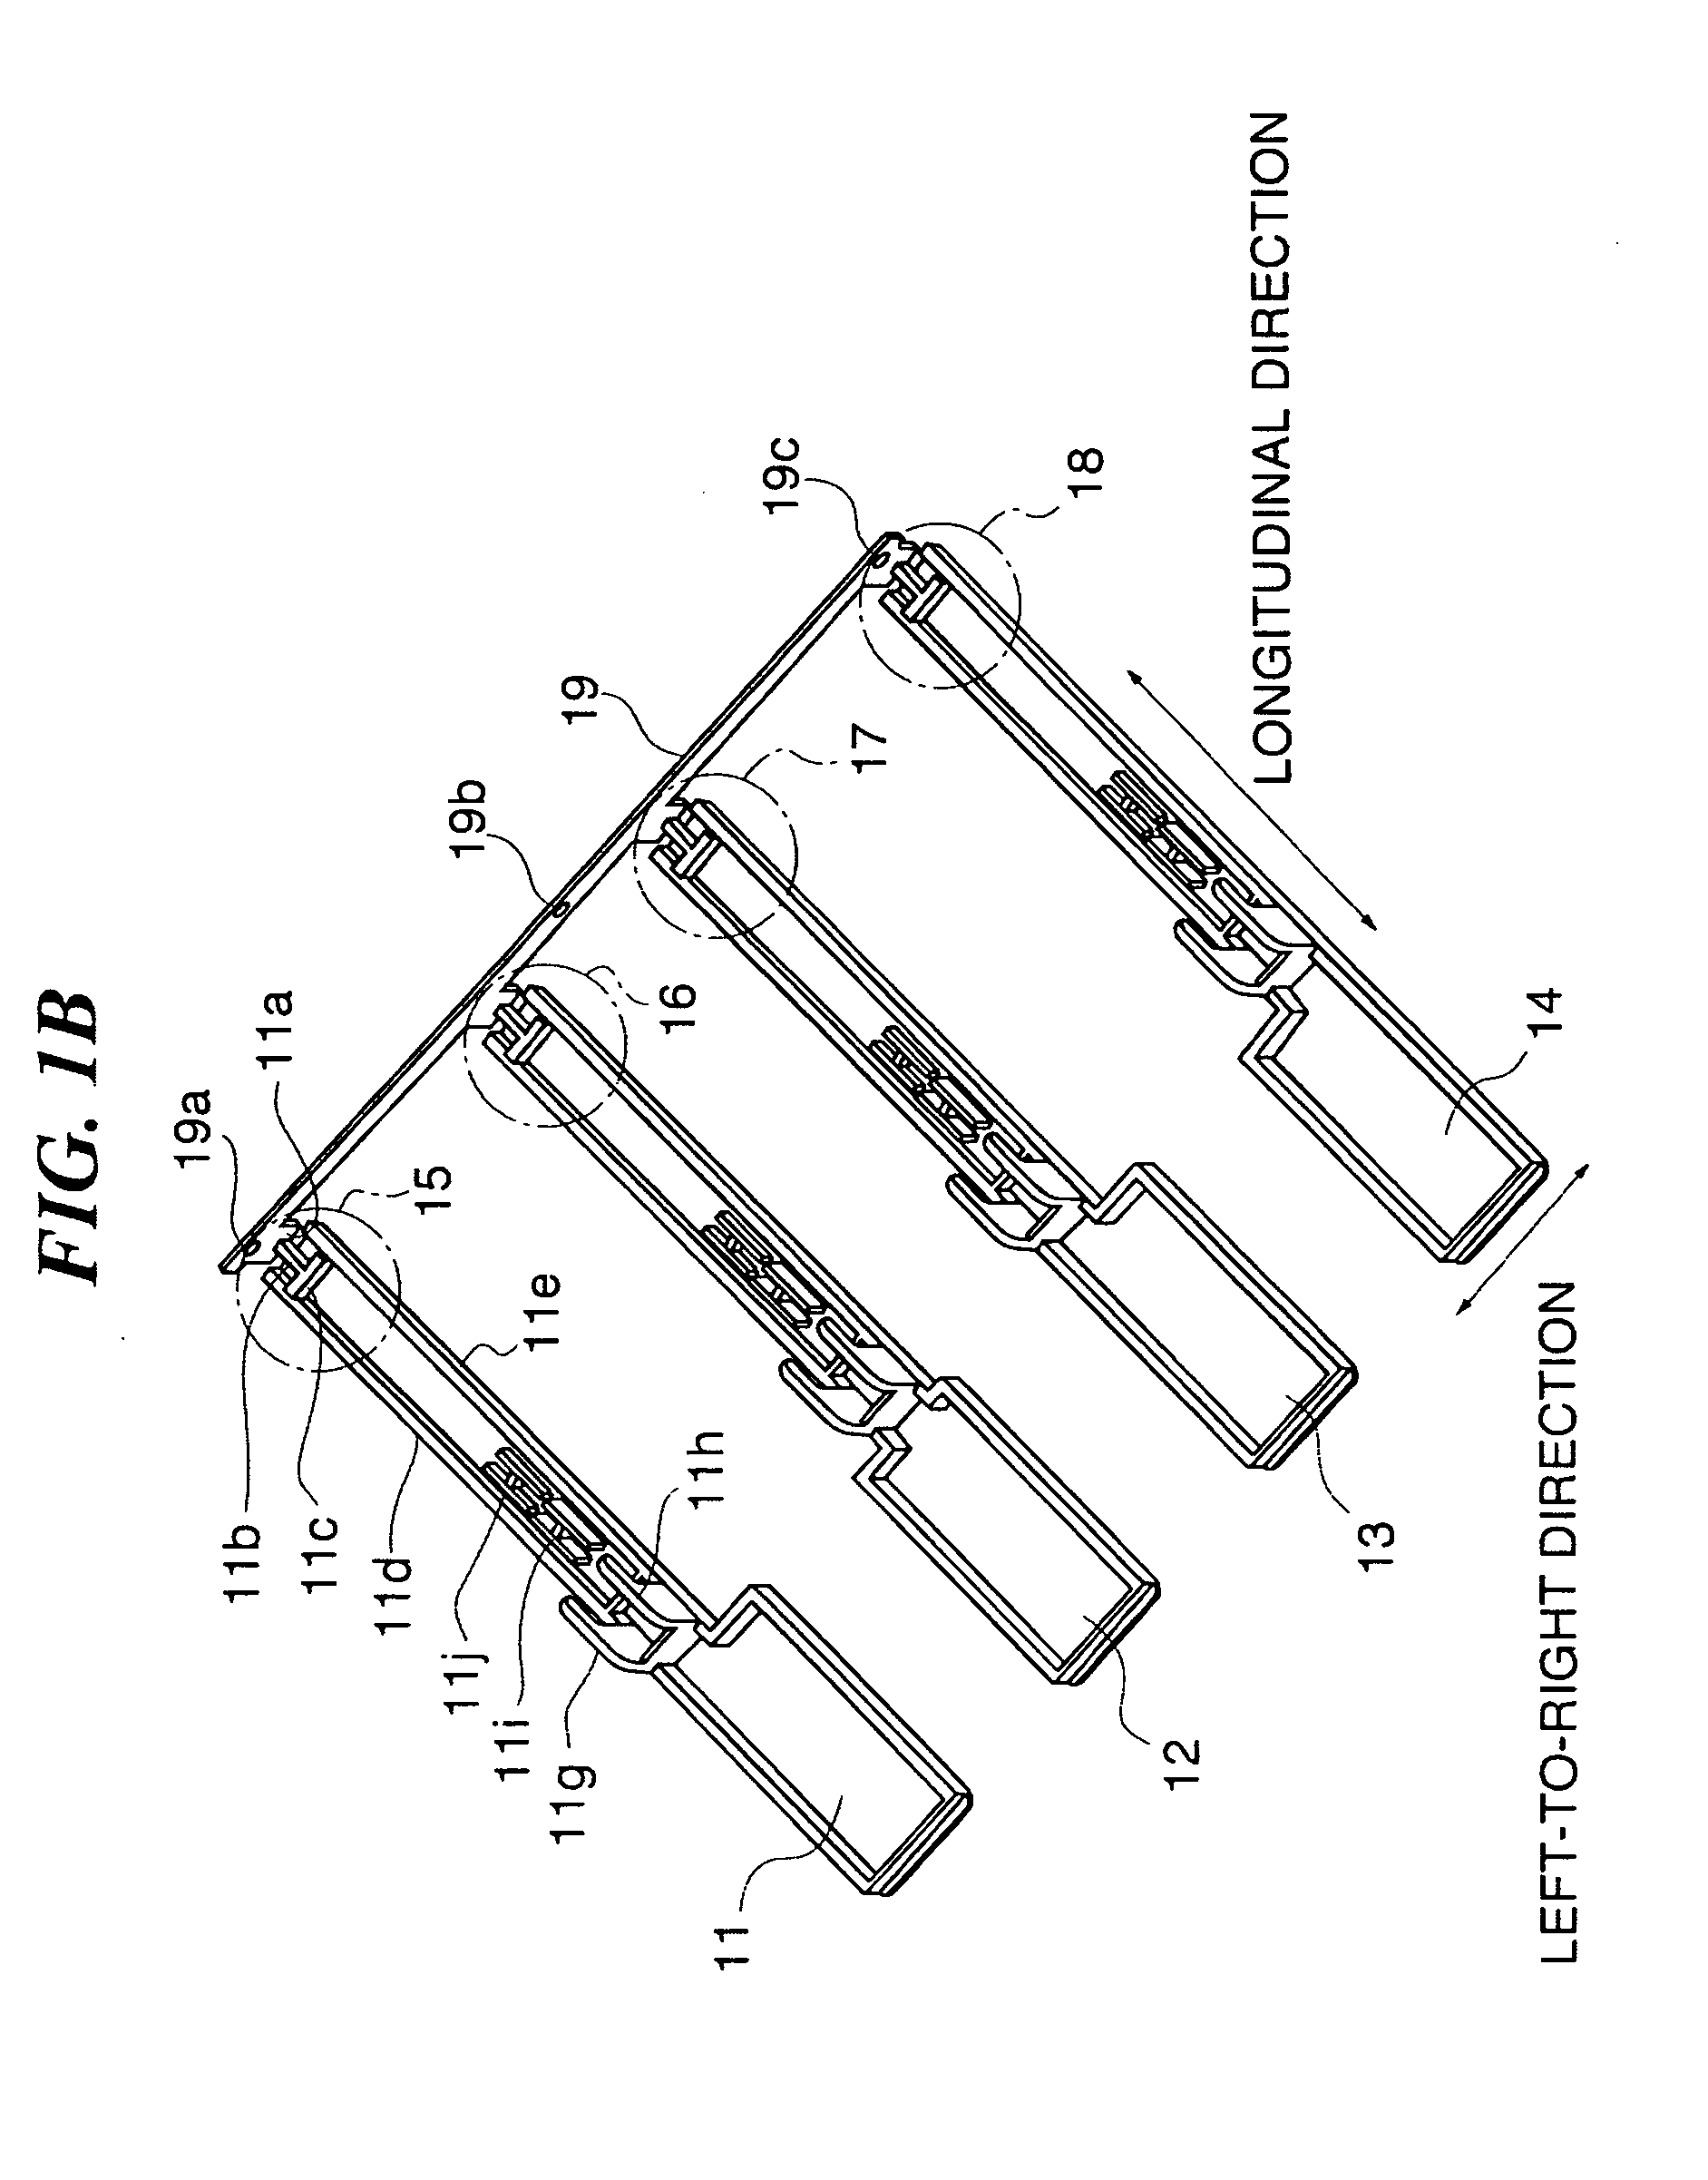 Keyboard apparatus of electronic keyboard instrument